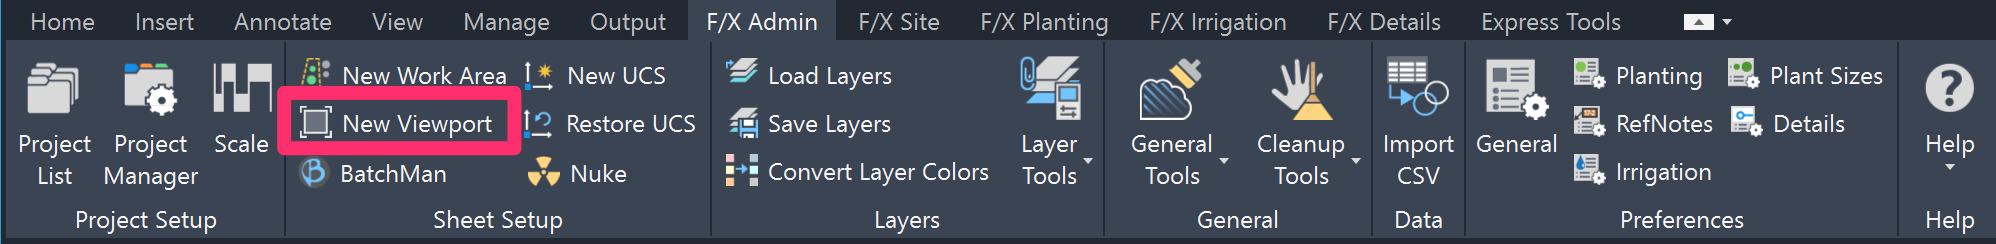 F/X Admin ribbon, New Viewport button